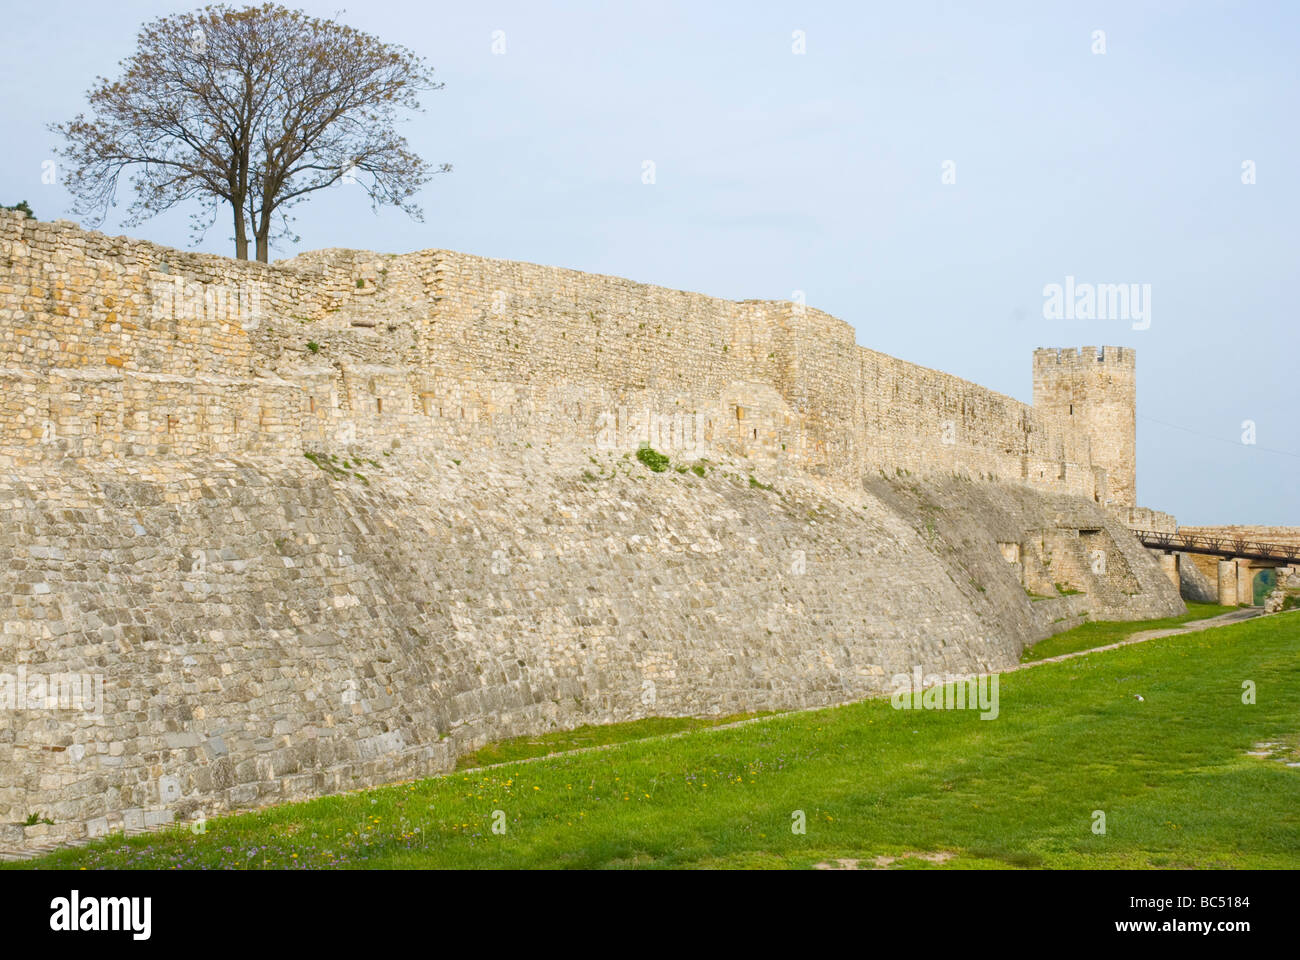 Fortress walls at Kalemegdan fortress in Belgrade Serbia Europe Stock Photo